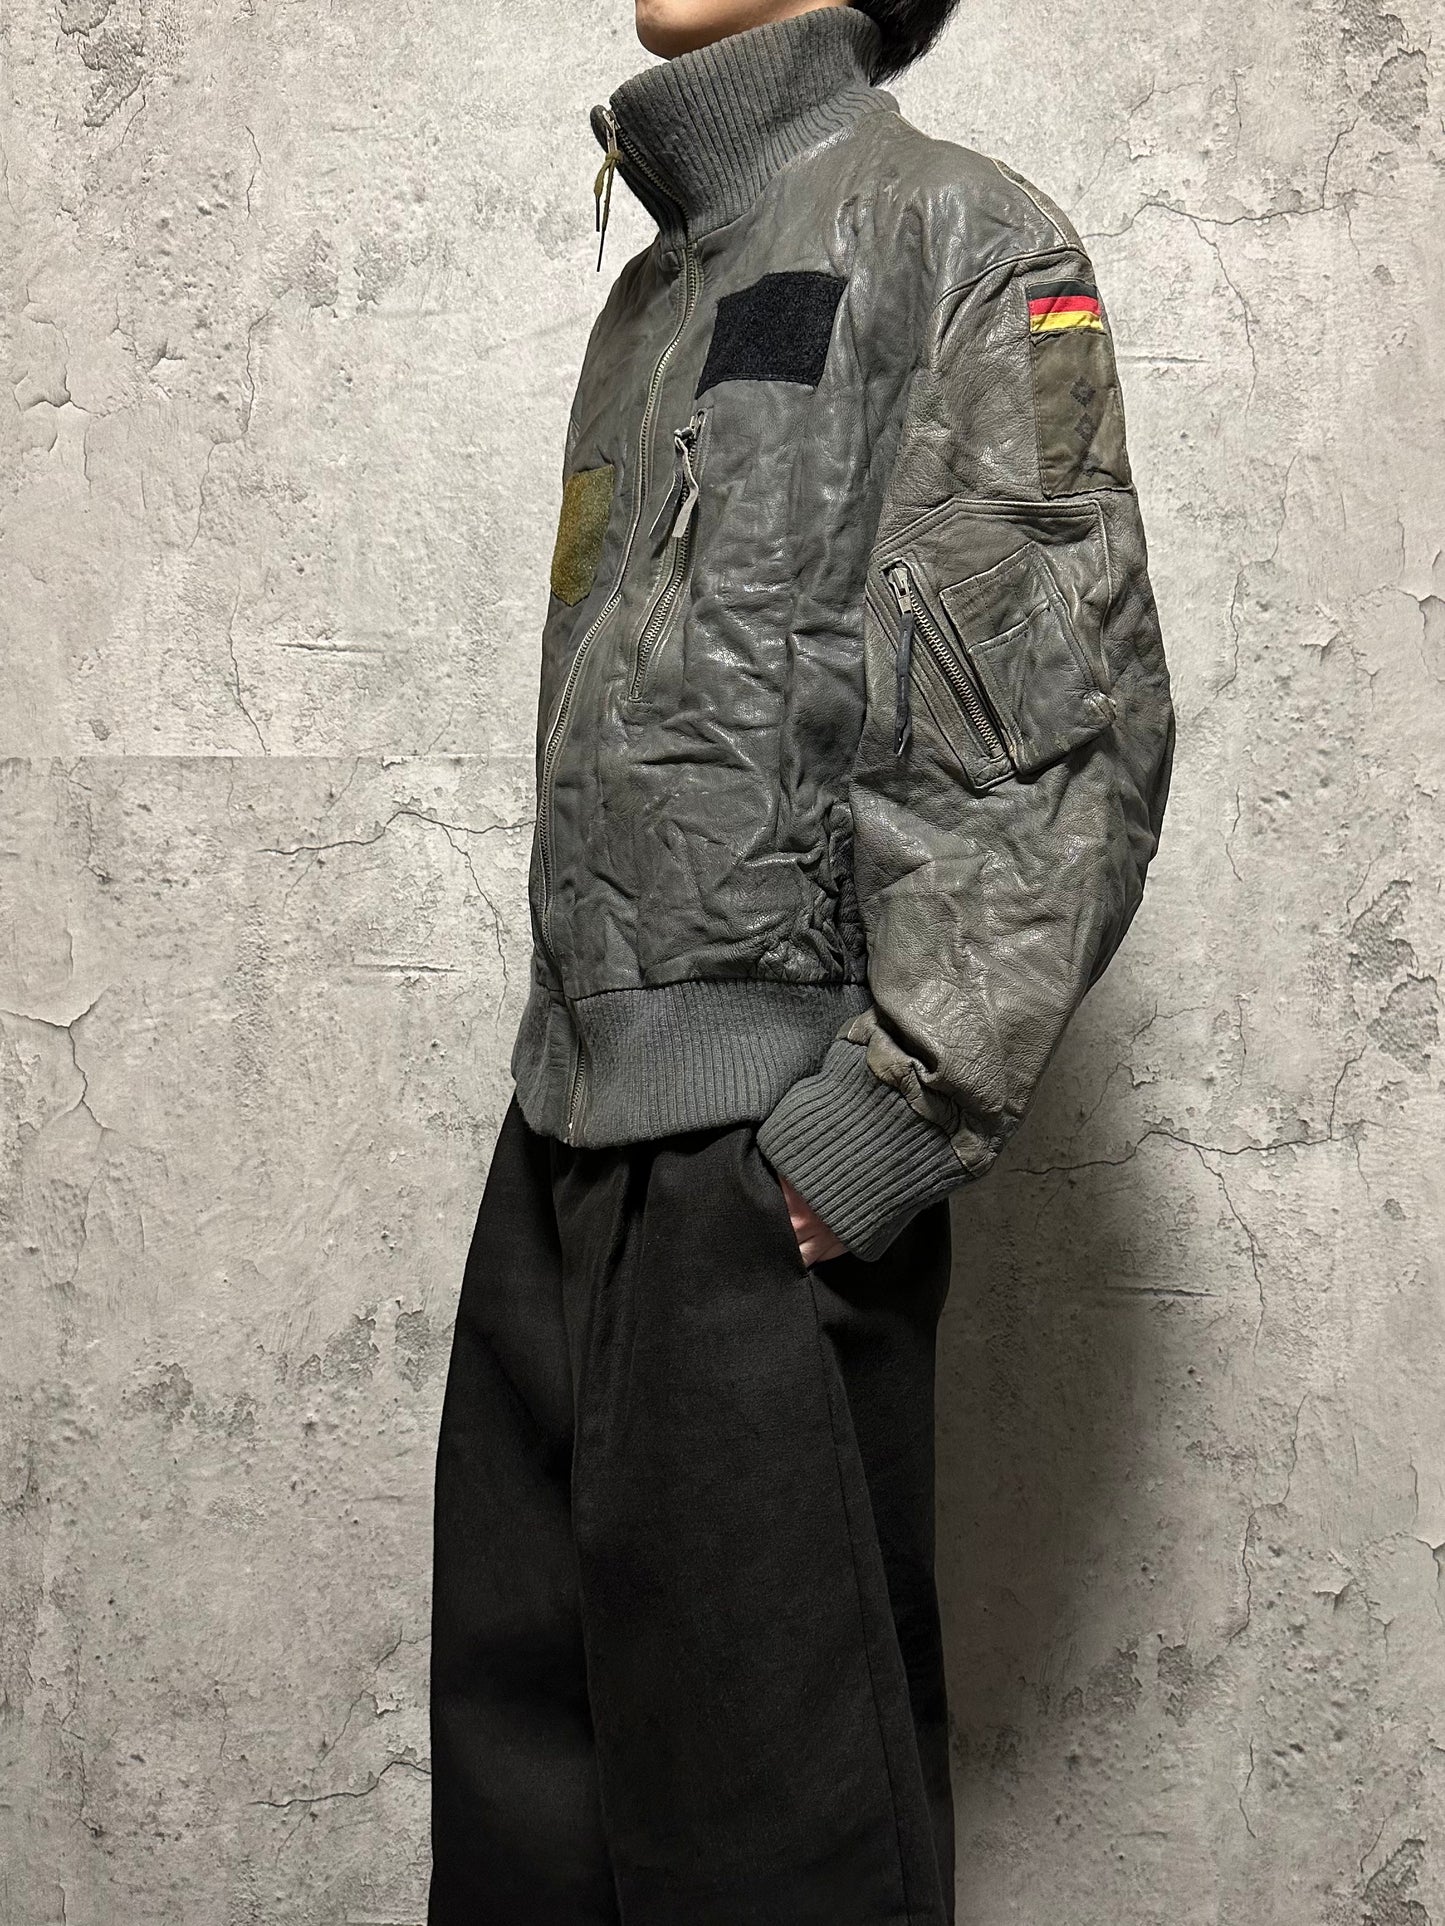 EURO Germany Military Pilot Leather Jacket vintage 70-80s